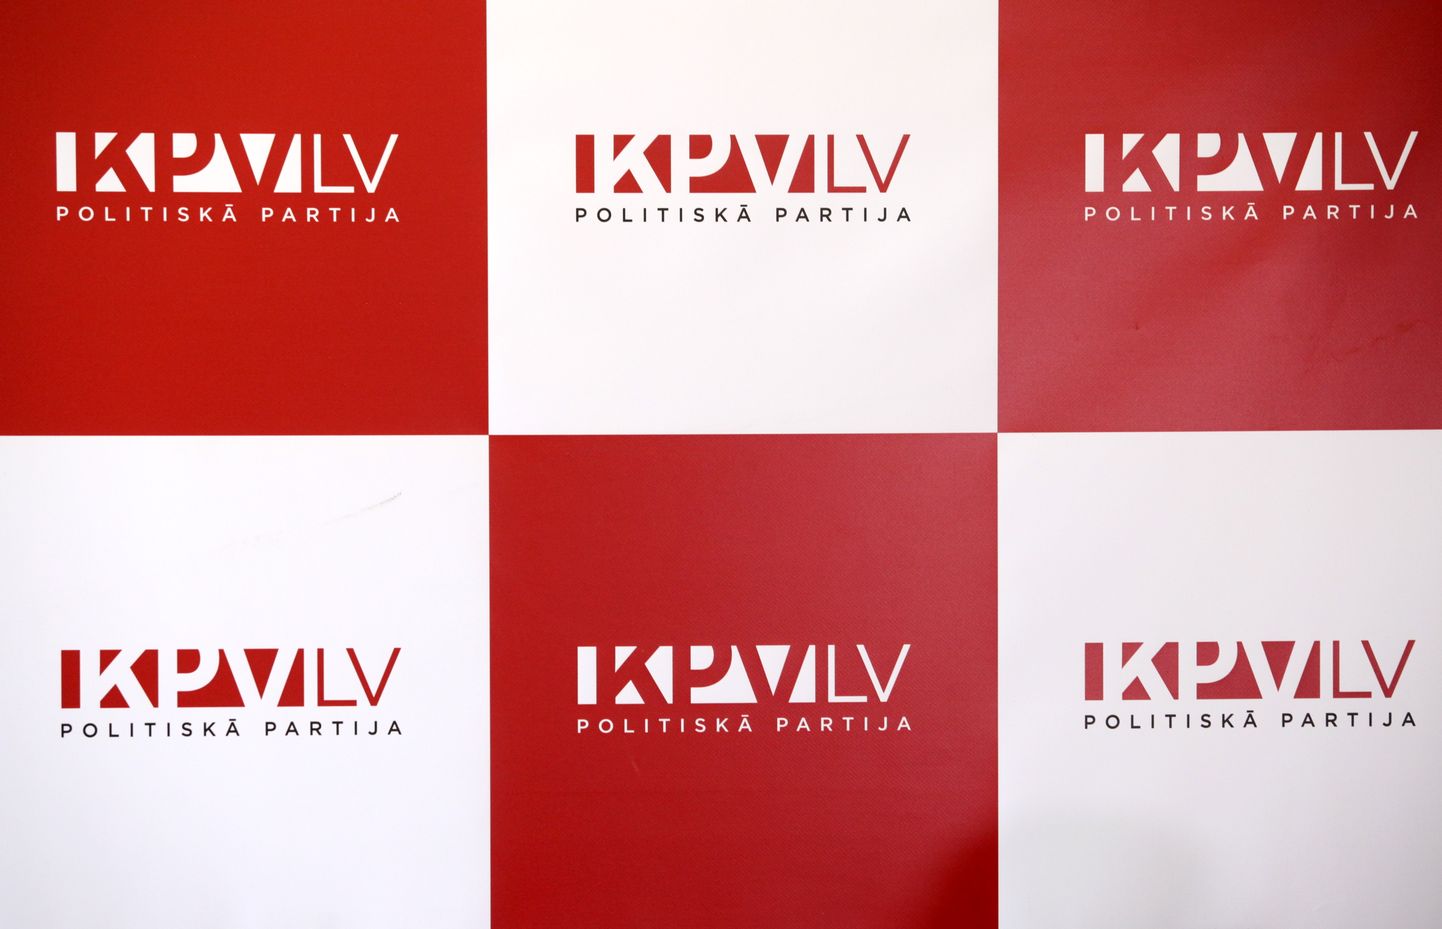 Partijas "KPV LV" logo.